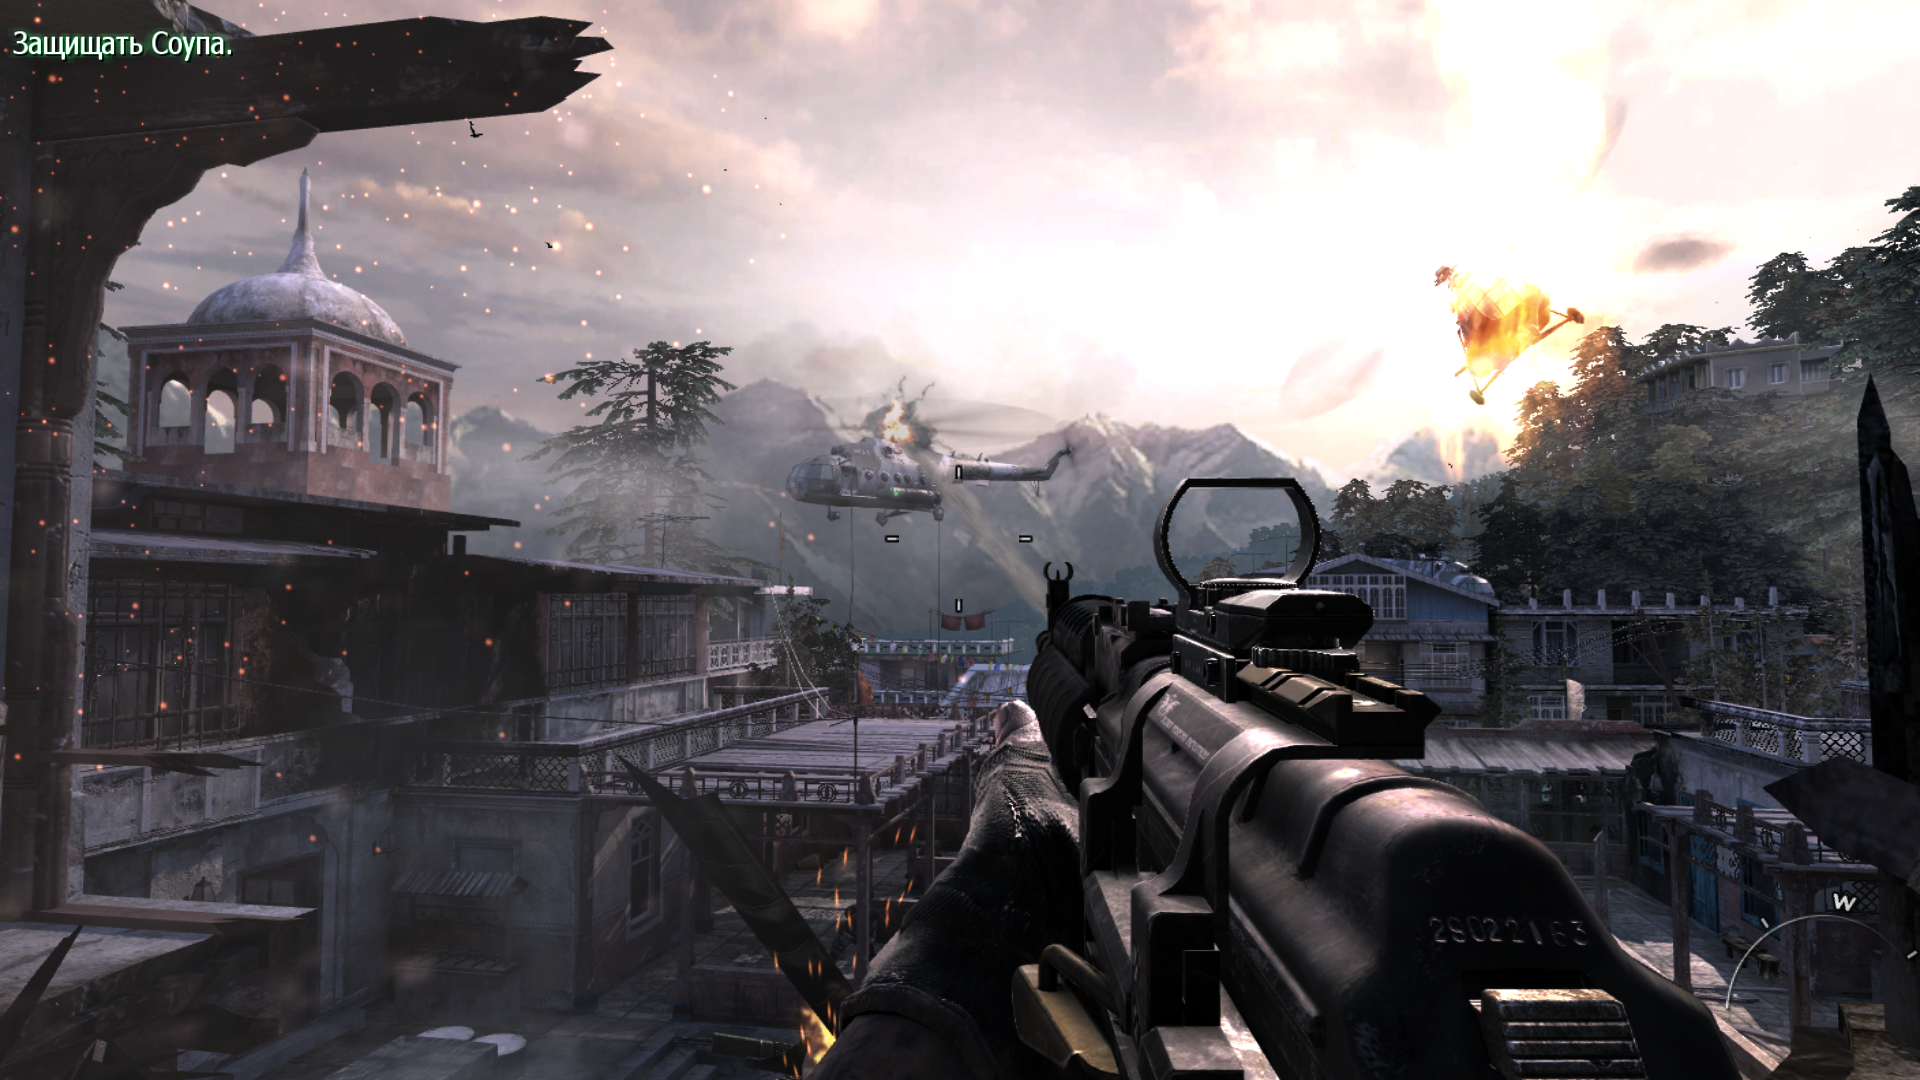 Call of Duty: Modern Warfare 3. Call of Duty mw3. Калл оф дьюти Модерн варфаре 3. Калл оф дьюти Модерн варфэйр 3. Игра от механиков калов дьюти